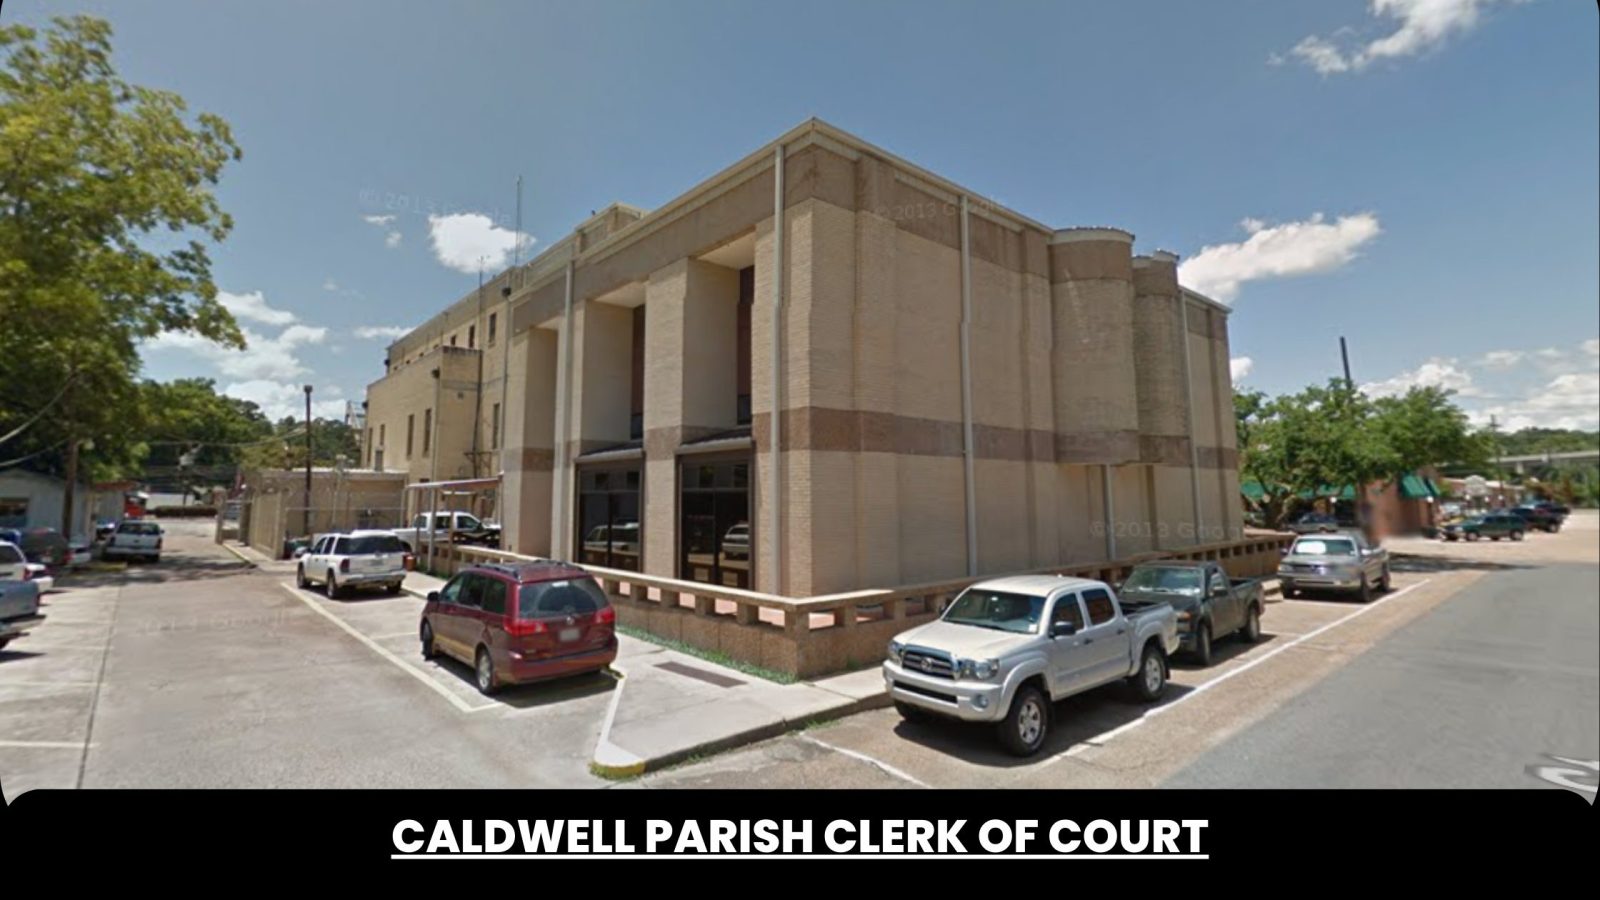 Caldwell Parish Clerk of Court